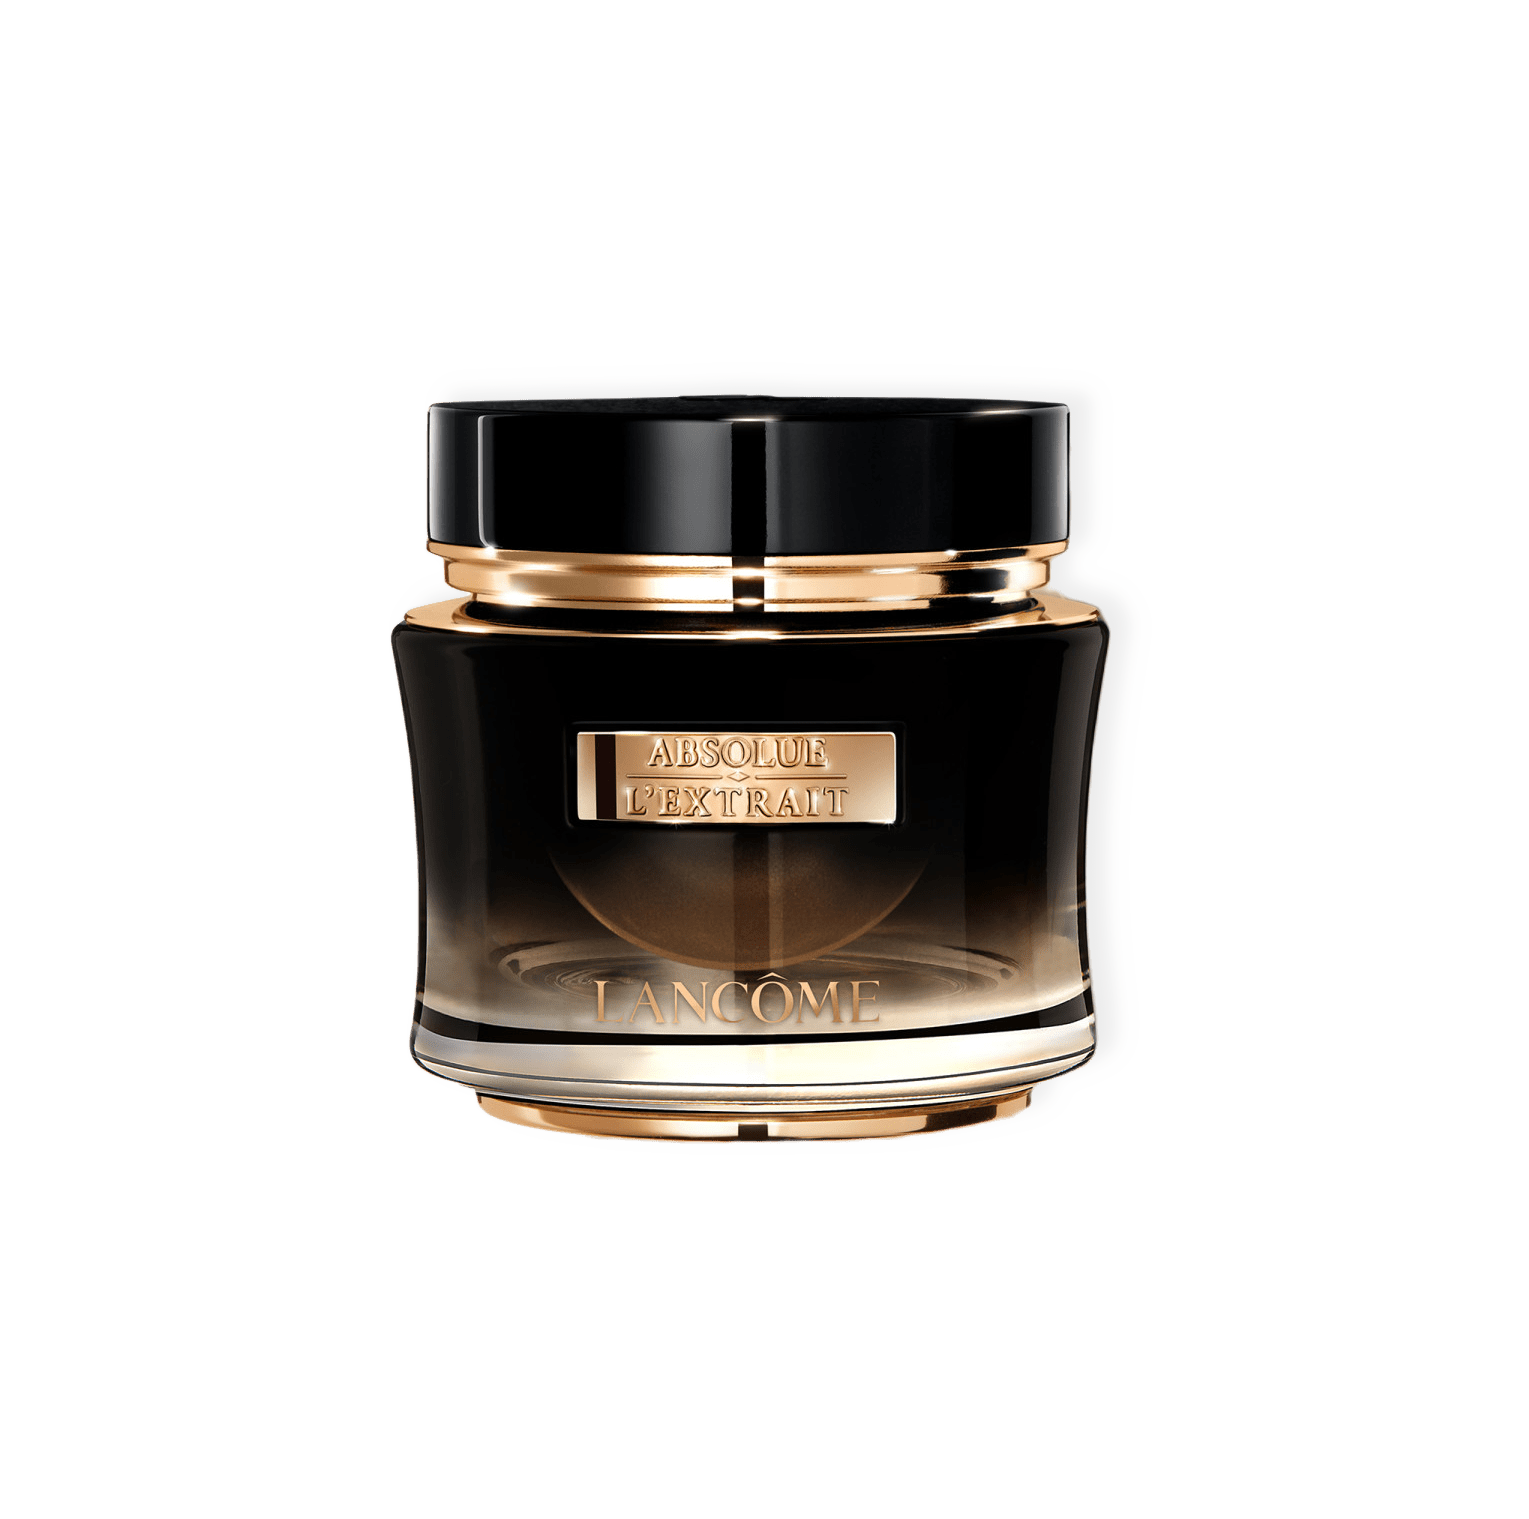 Absolue L'Extrait Light Cream från Lancôme